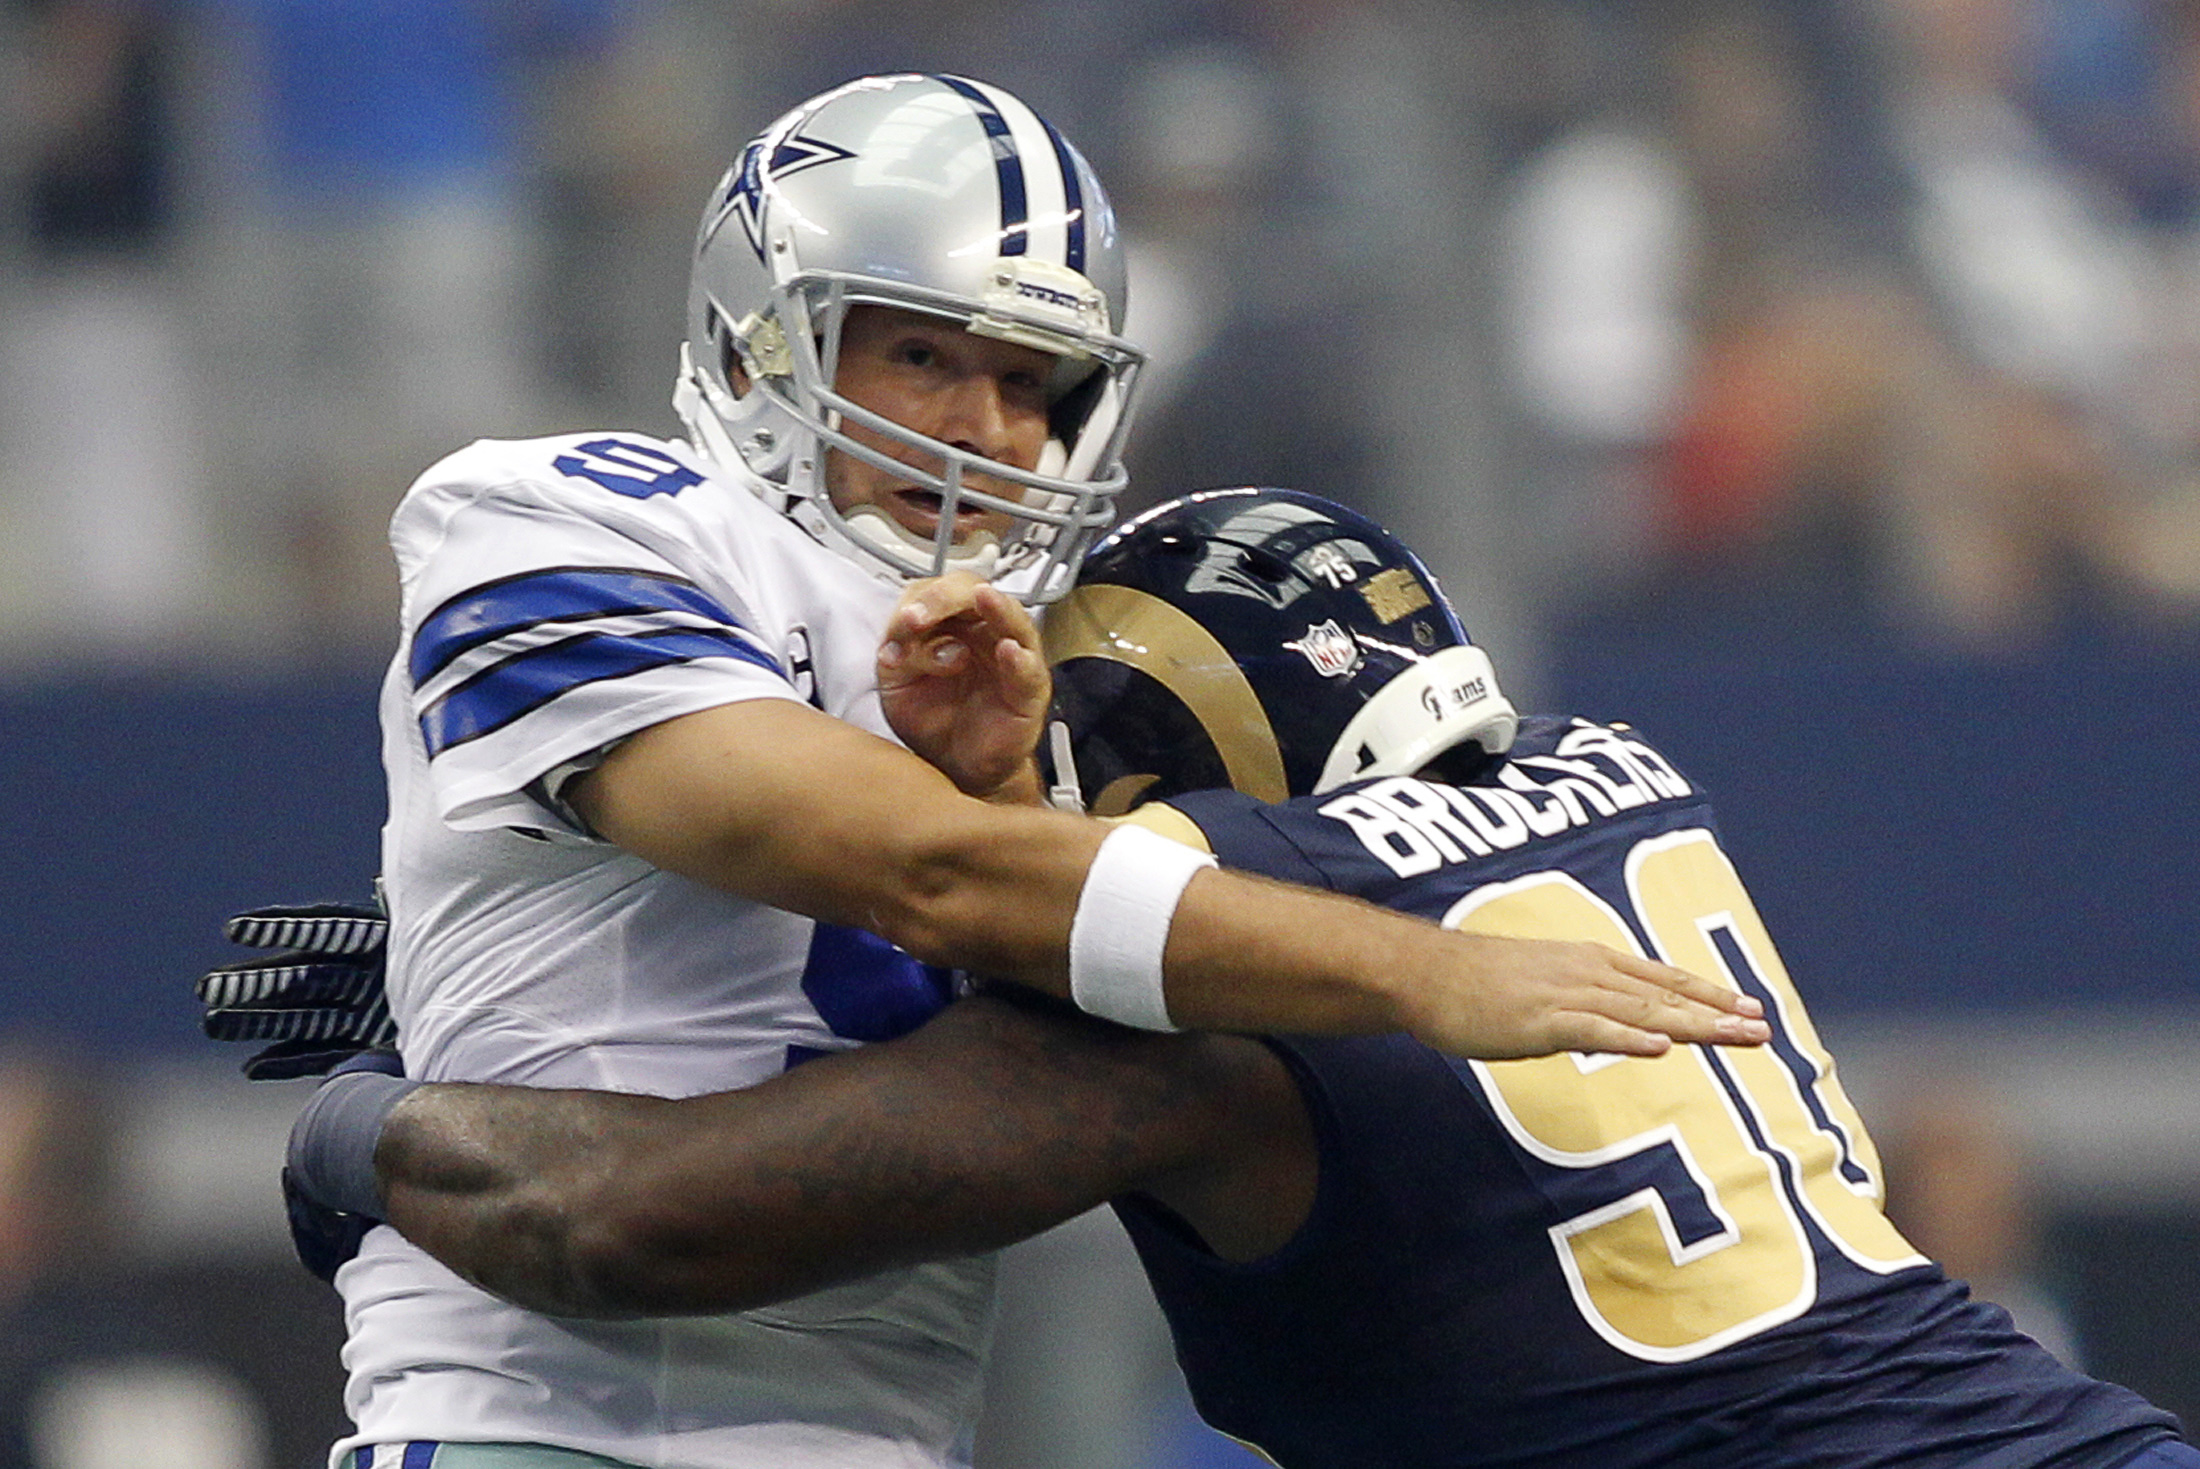 Dallas Cowboys quarterback Tony Romo is hit by St. Louis Rams defensive tackle Michael Brockers in Arlington, Texas